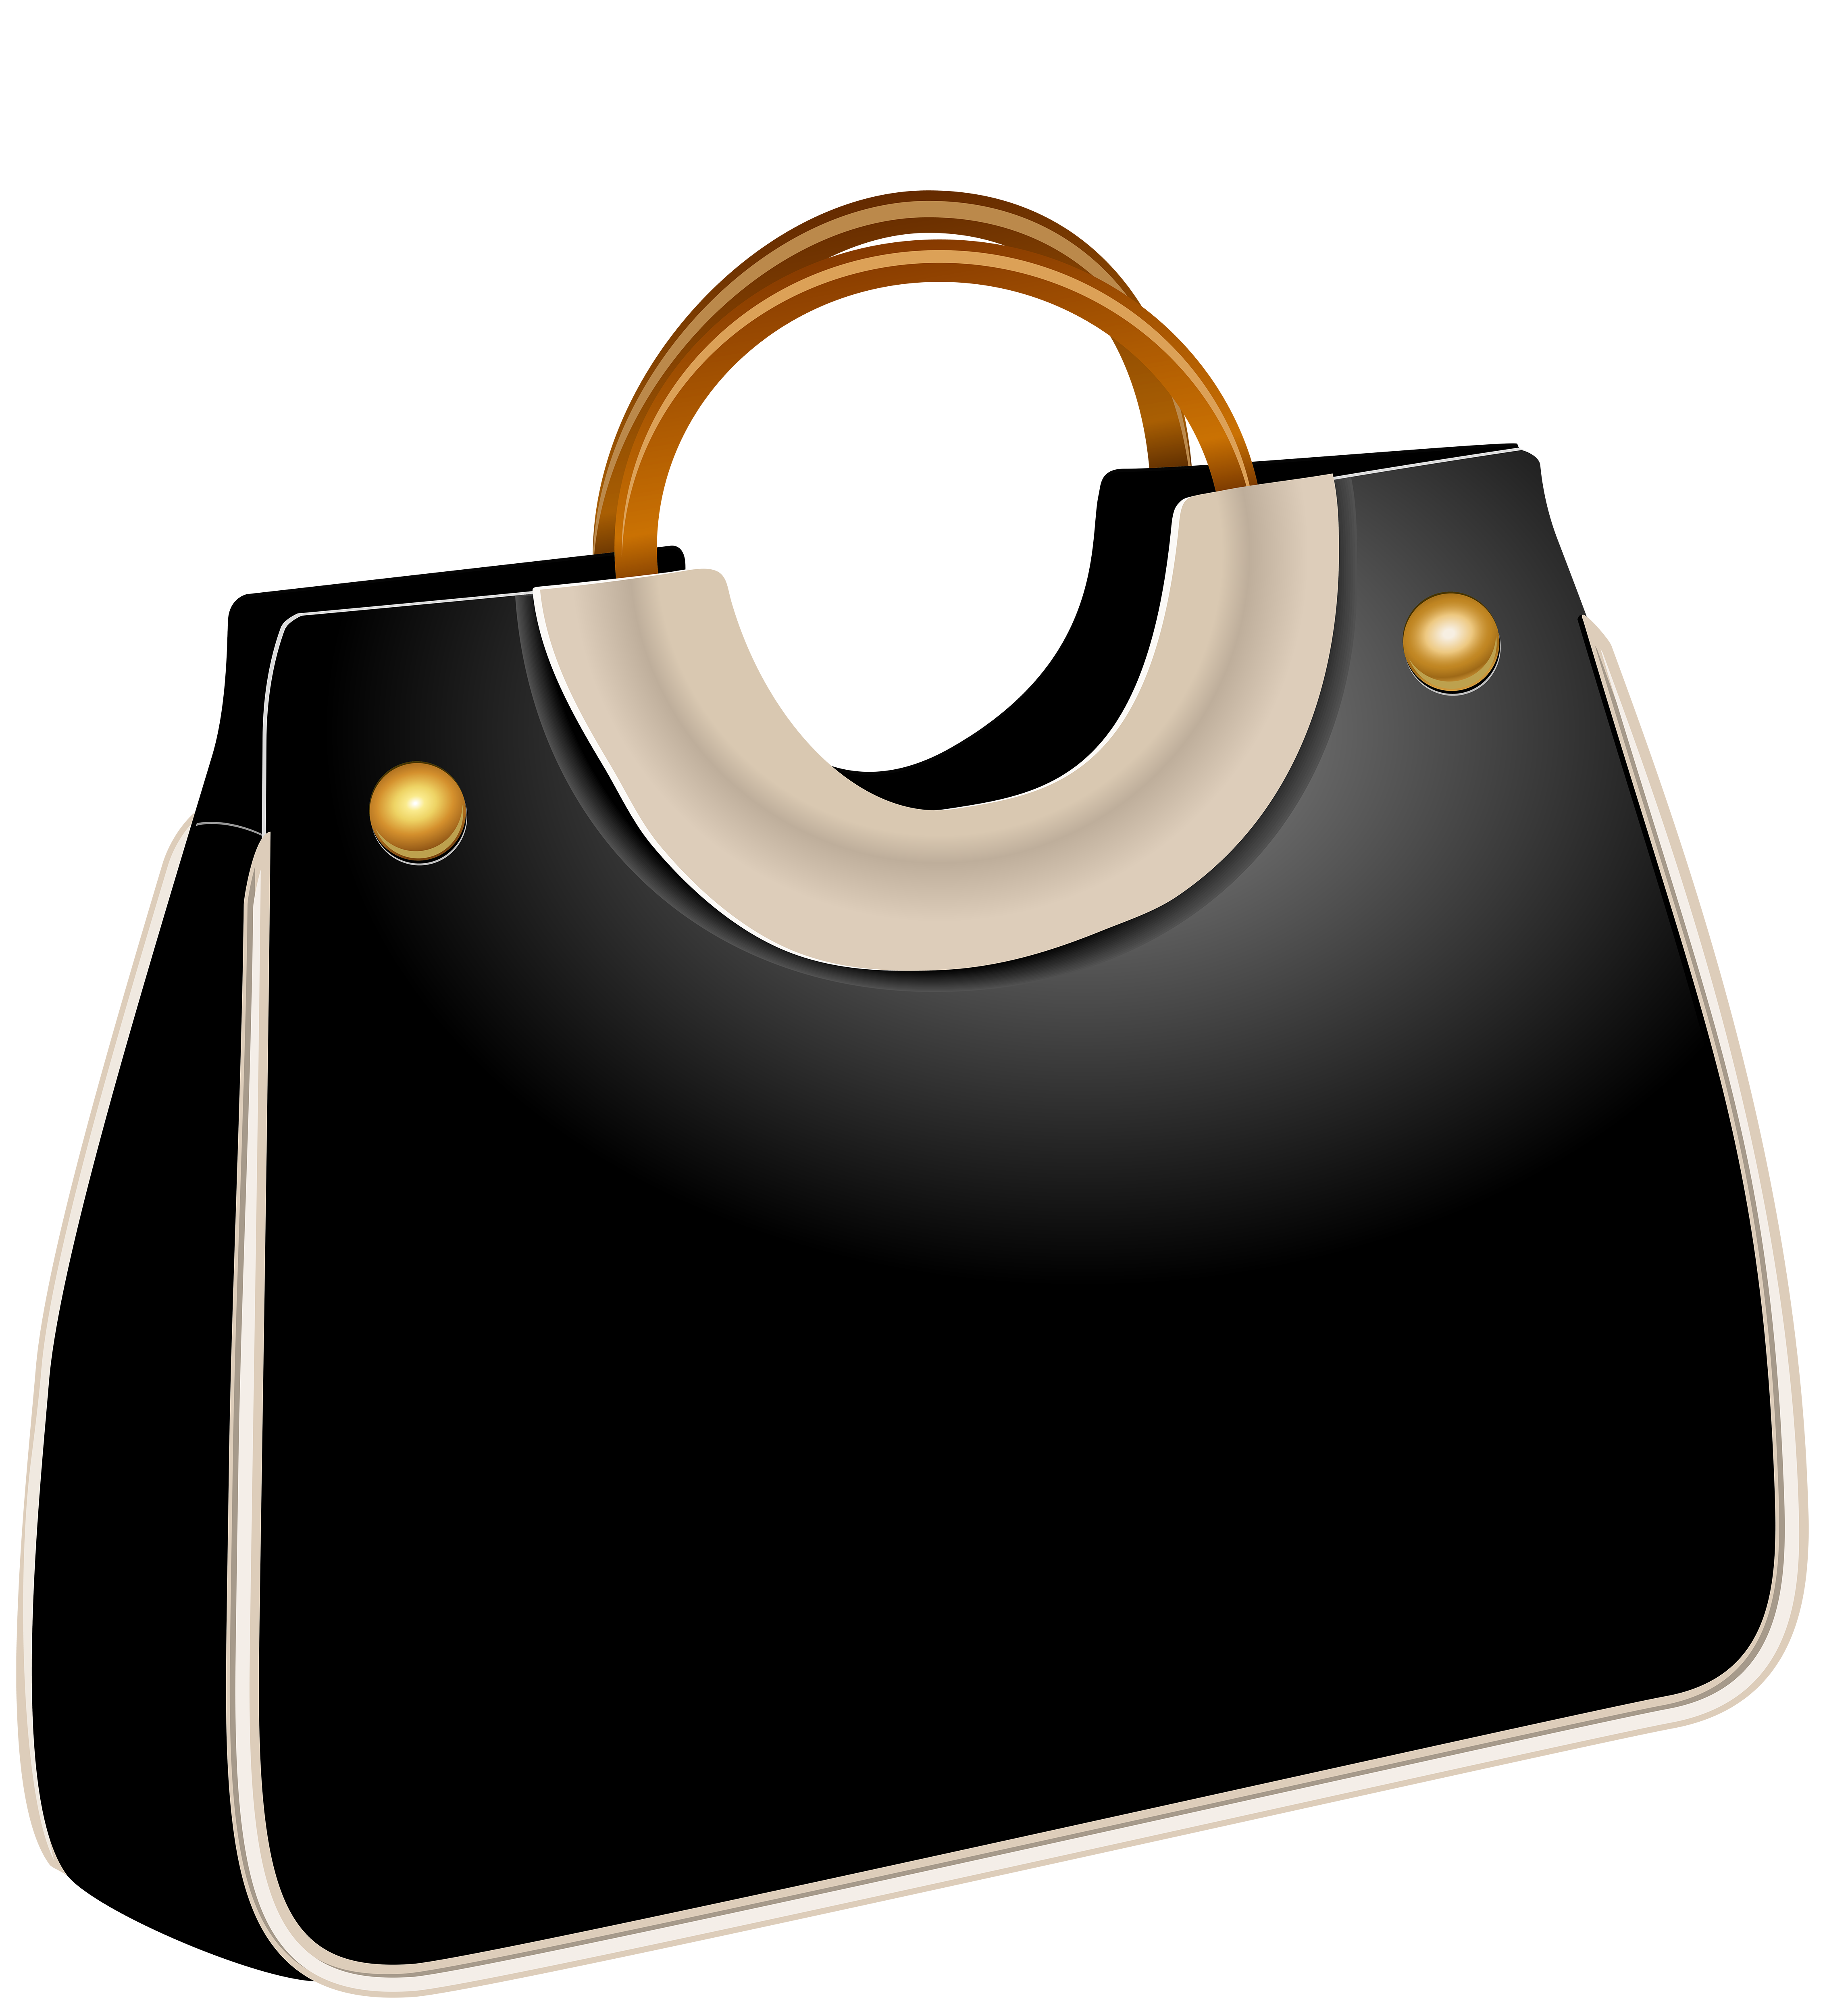 Women Fashion Hand Bag with Single Top Handle. Handleheld Handbag with  Small Flap Cover Stock Vector - Illustration of cartoon, decor: 228112375